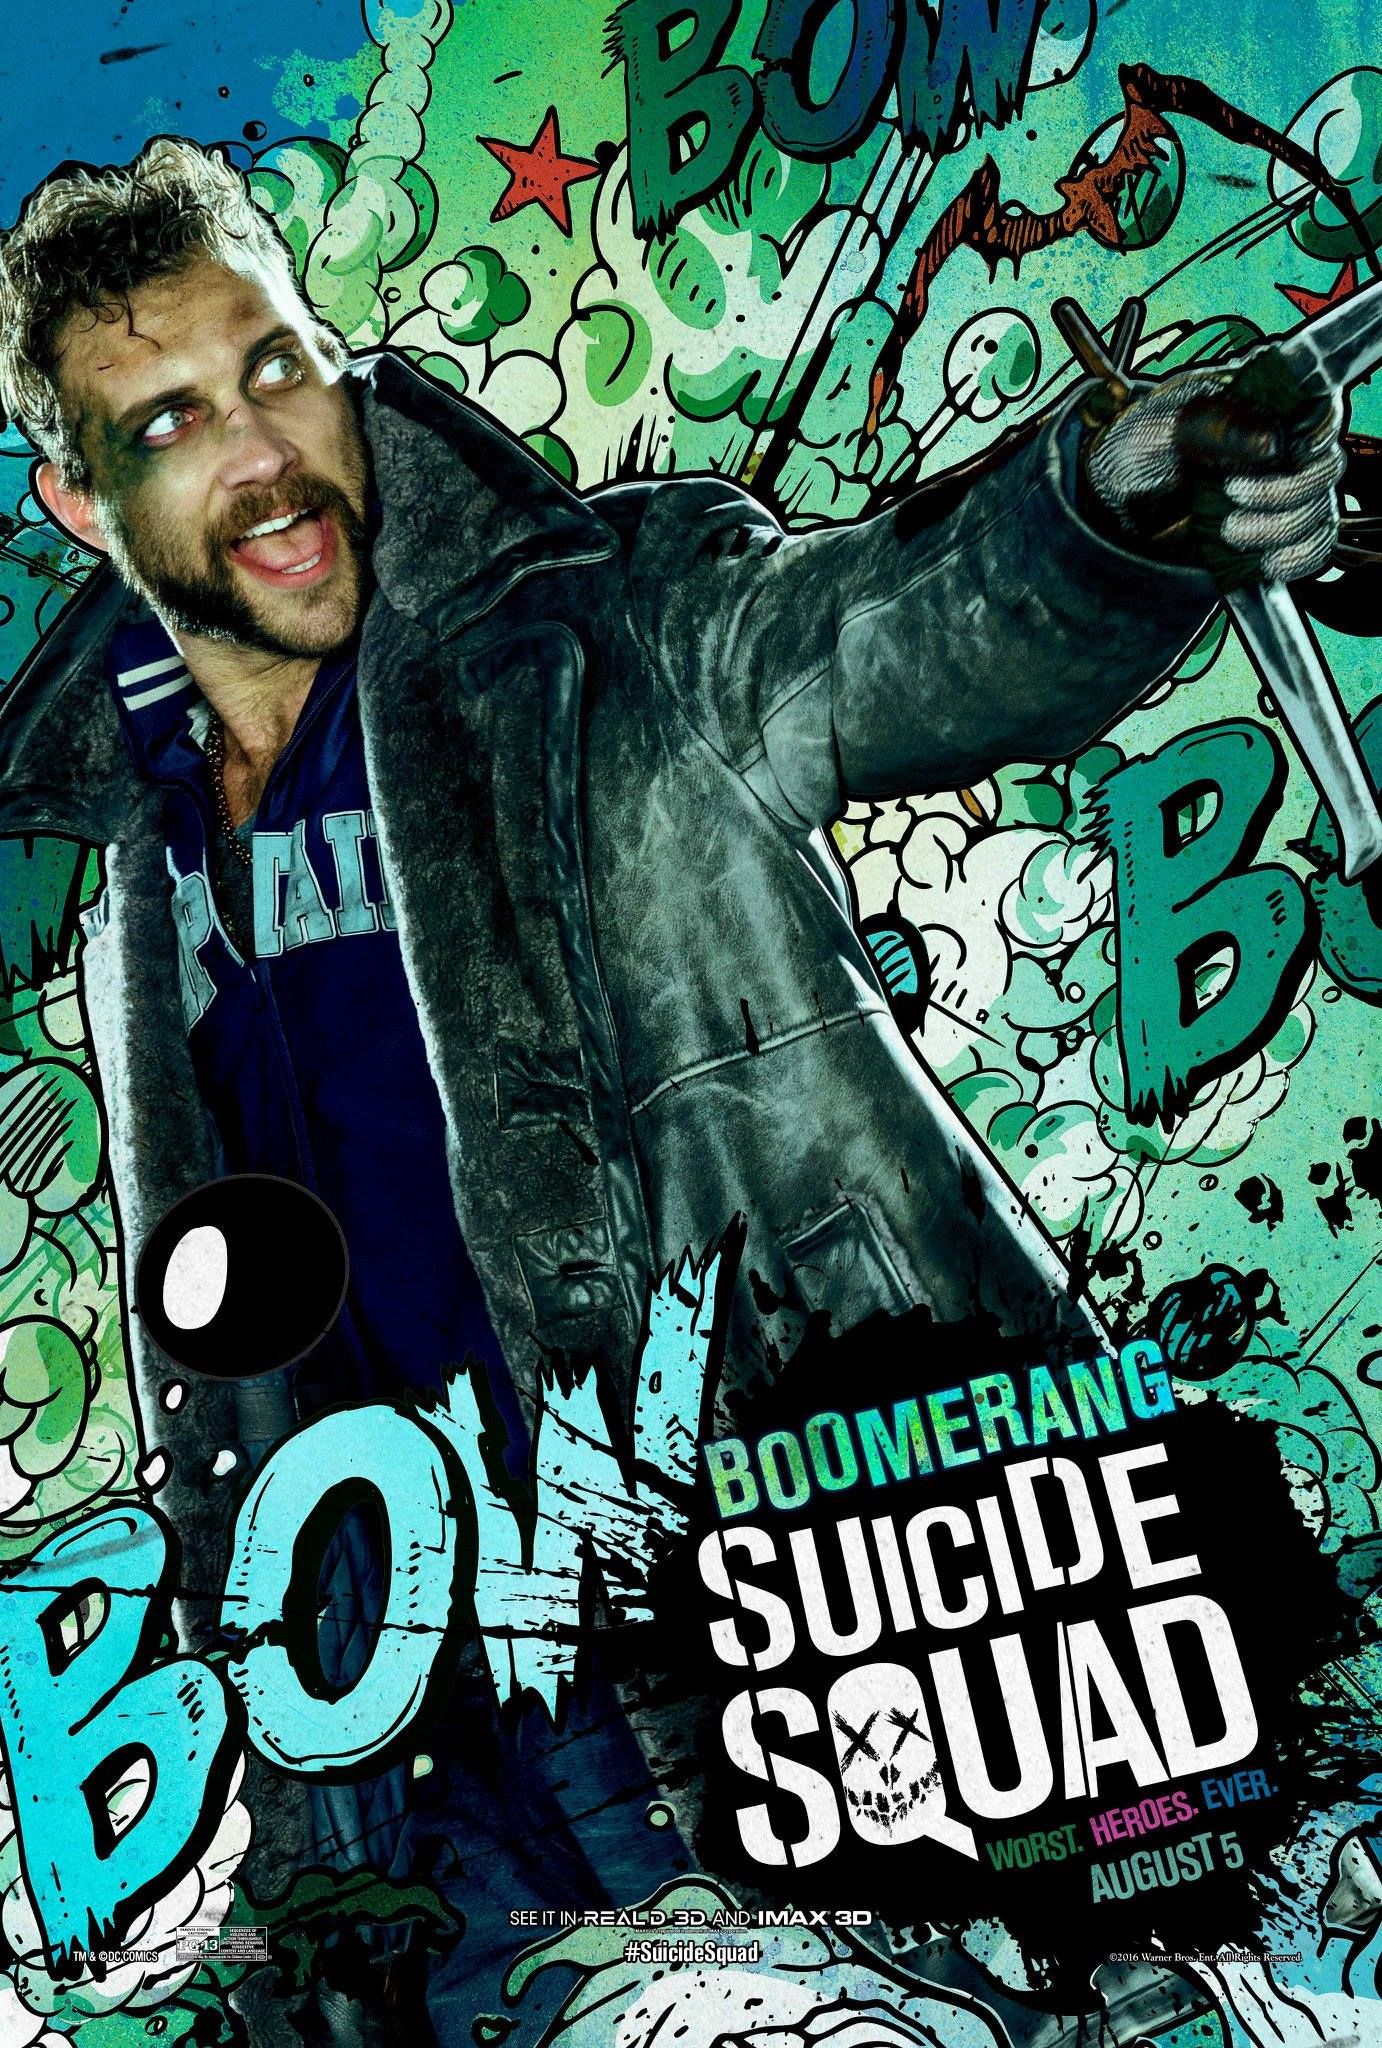 Suicide Squad Boomerang Comic Poster